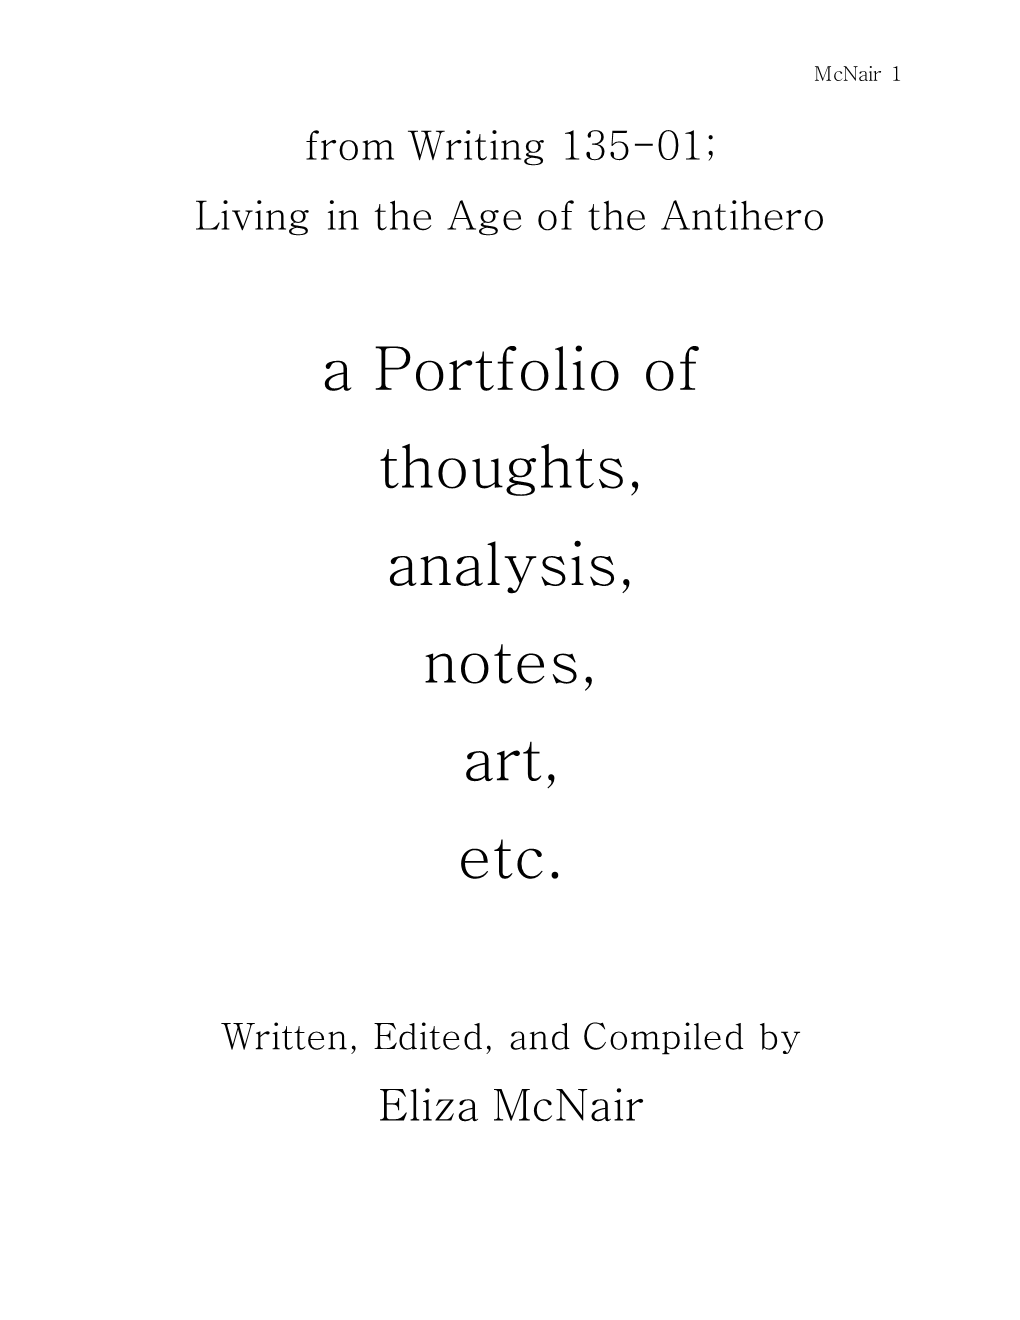 A Portfolio of Thoughts, Analysis, Notes, Art, Etc